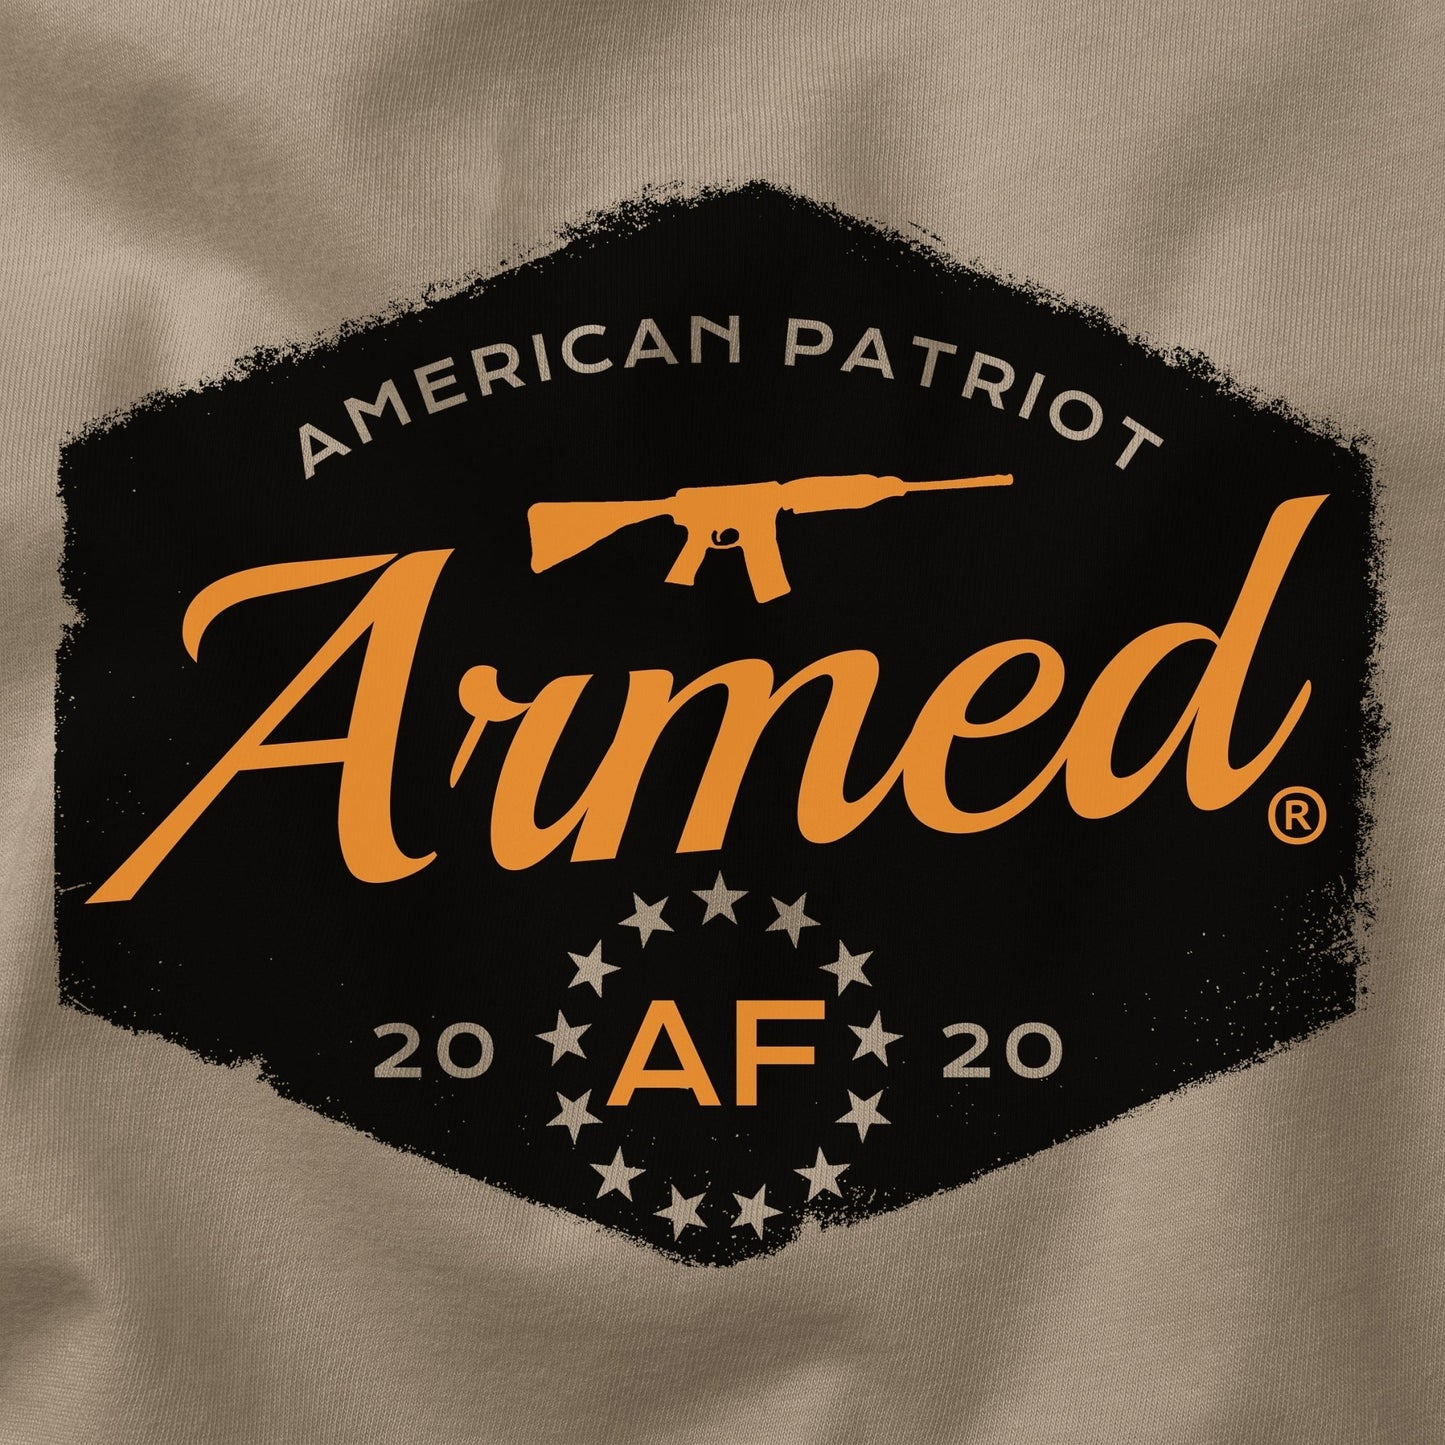 ArmedAF® coyote logo t-shirt - ArmedAF